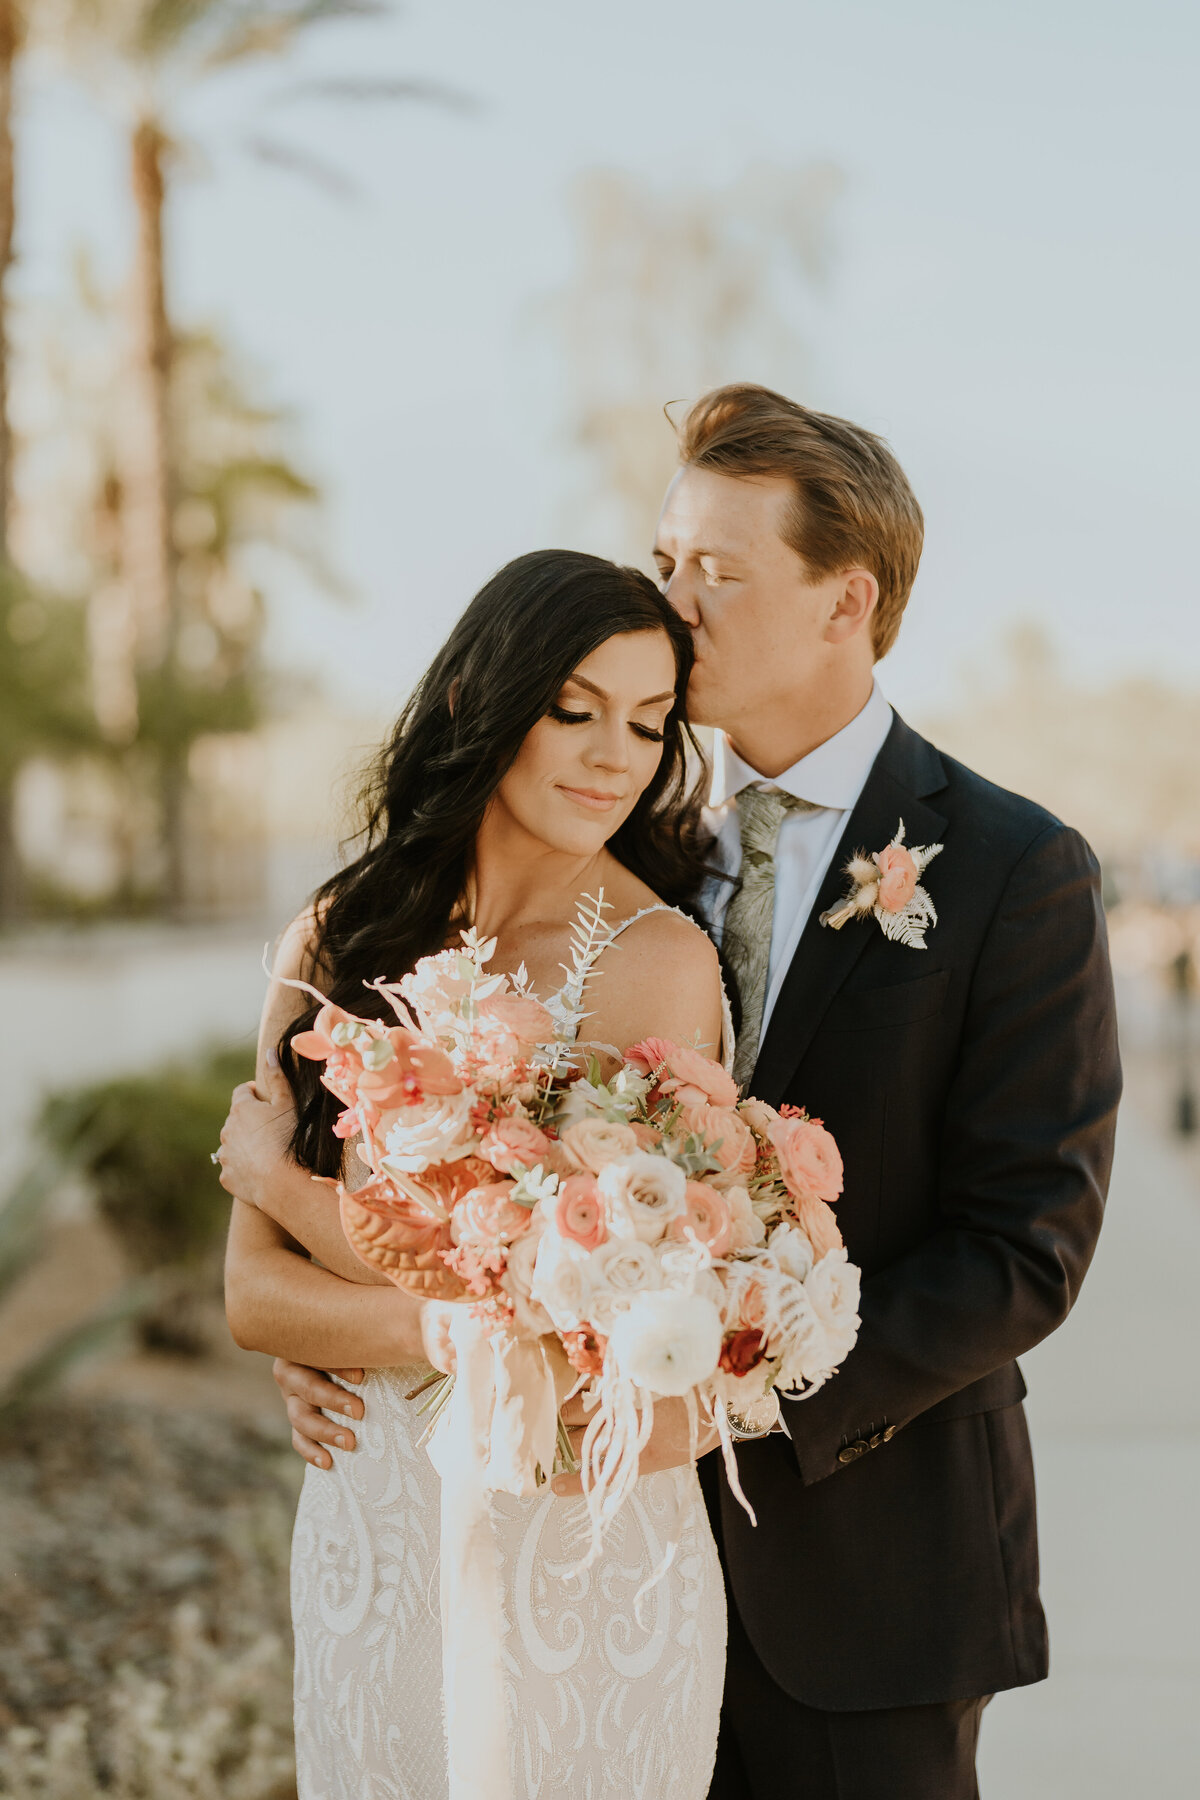 Temecula, California Wedding photographer Yescphotography wedding photo with bouquet